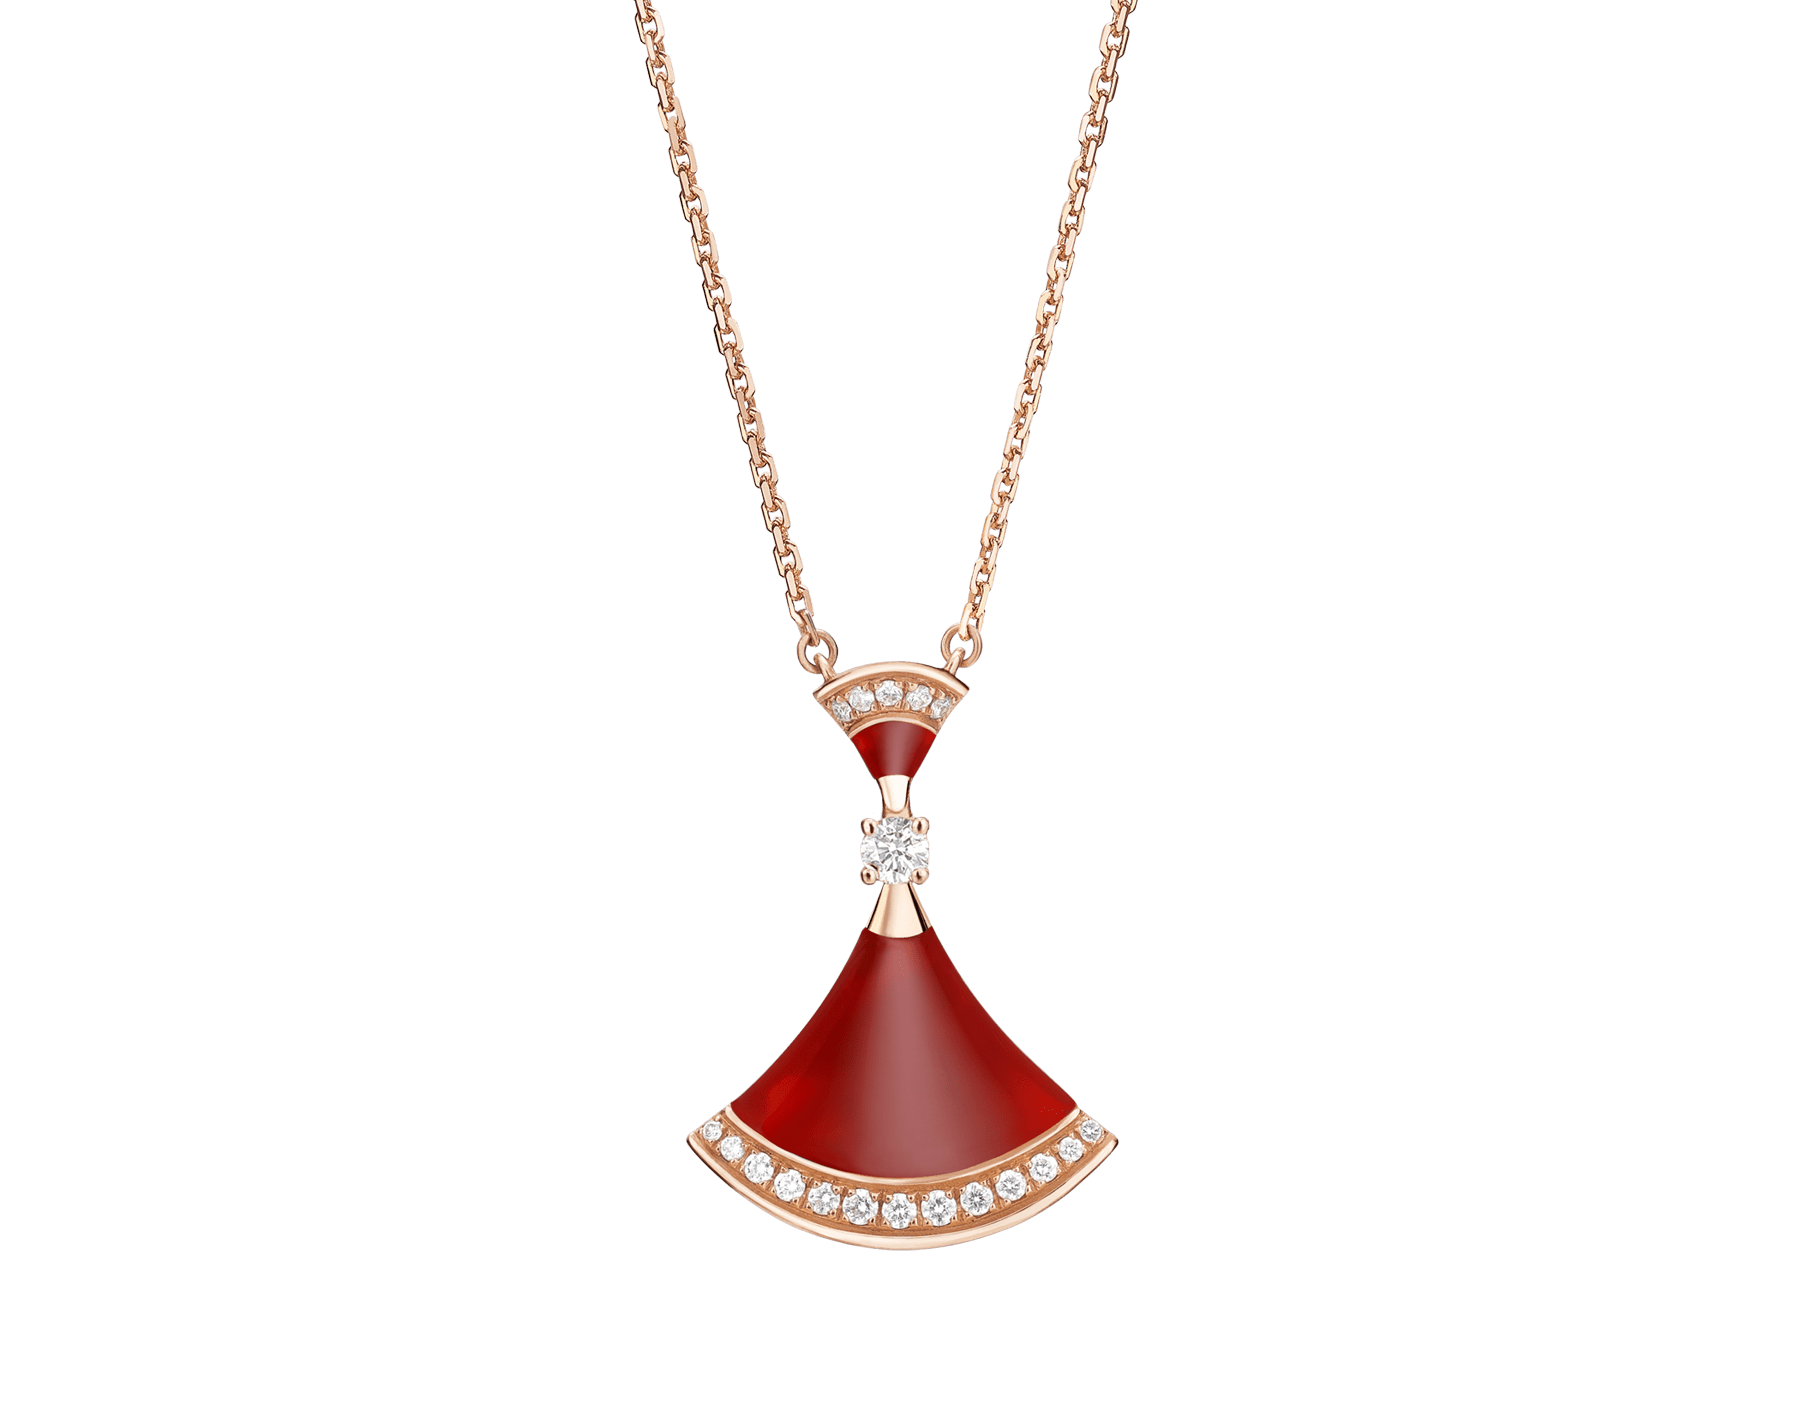 Wholesale 18 kt rose OEM/ODM Jewelry gold necklace set with carnelian elements, a round brilliant-cut diamond and pavé diamonds OEM design jewelry